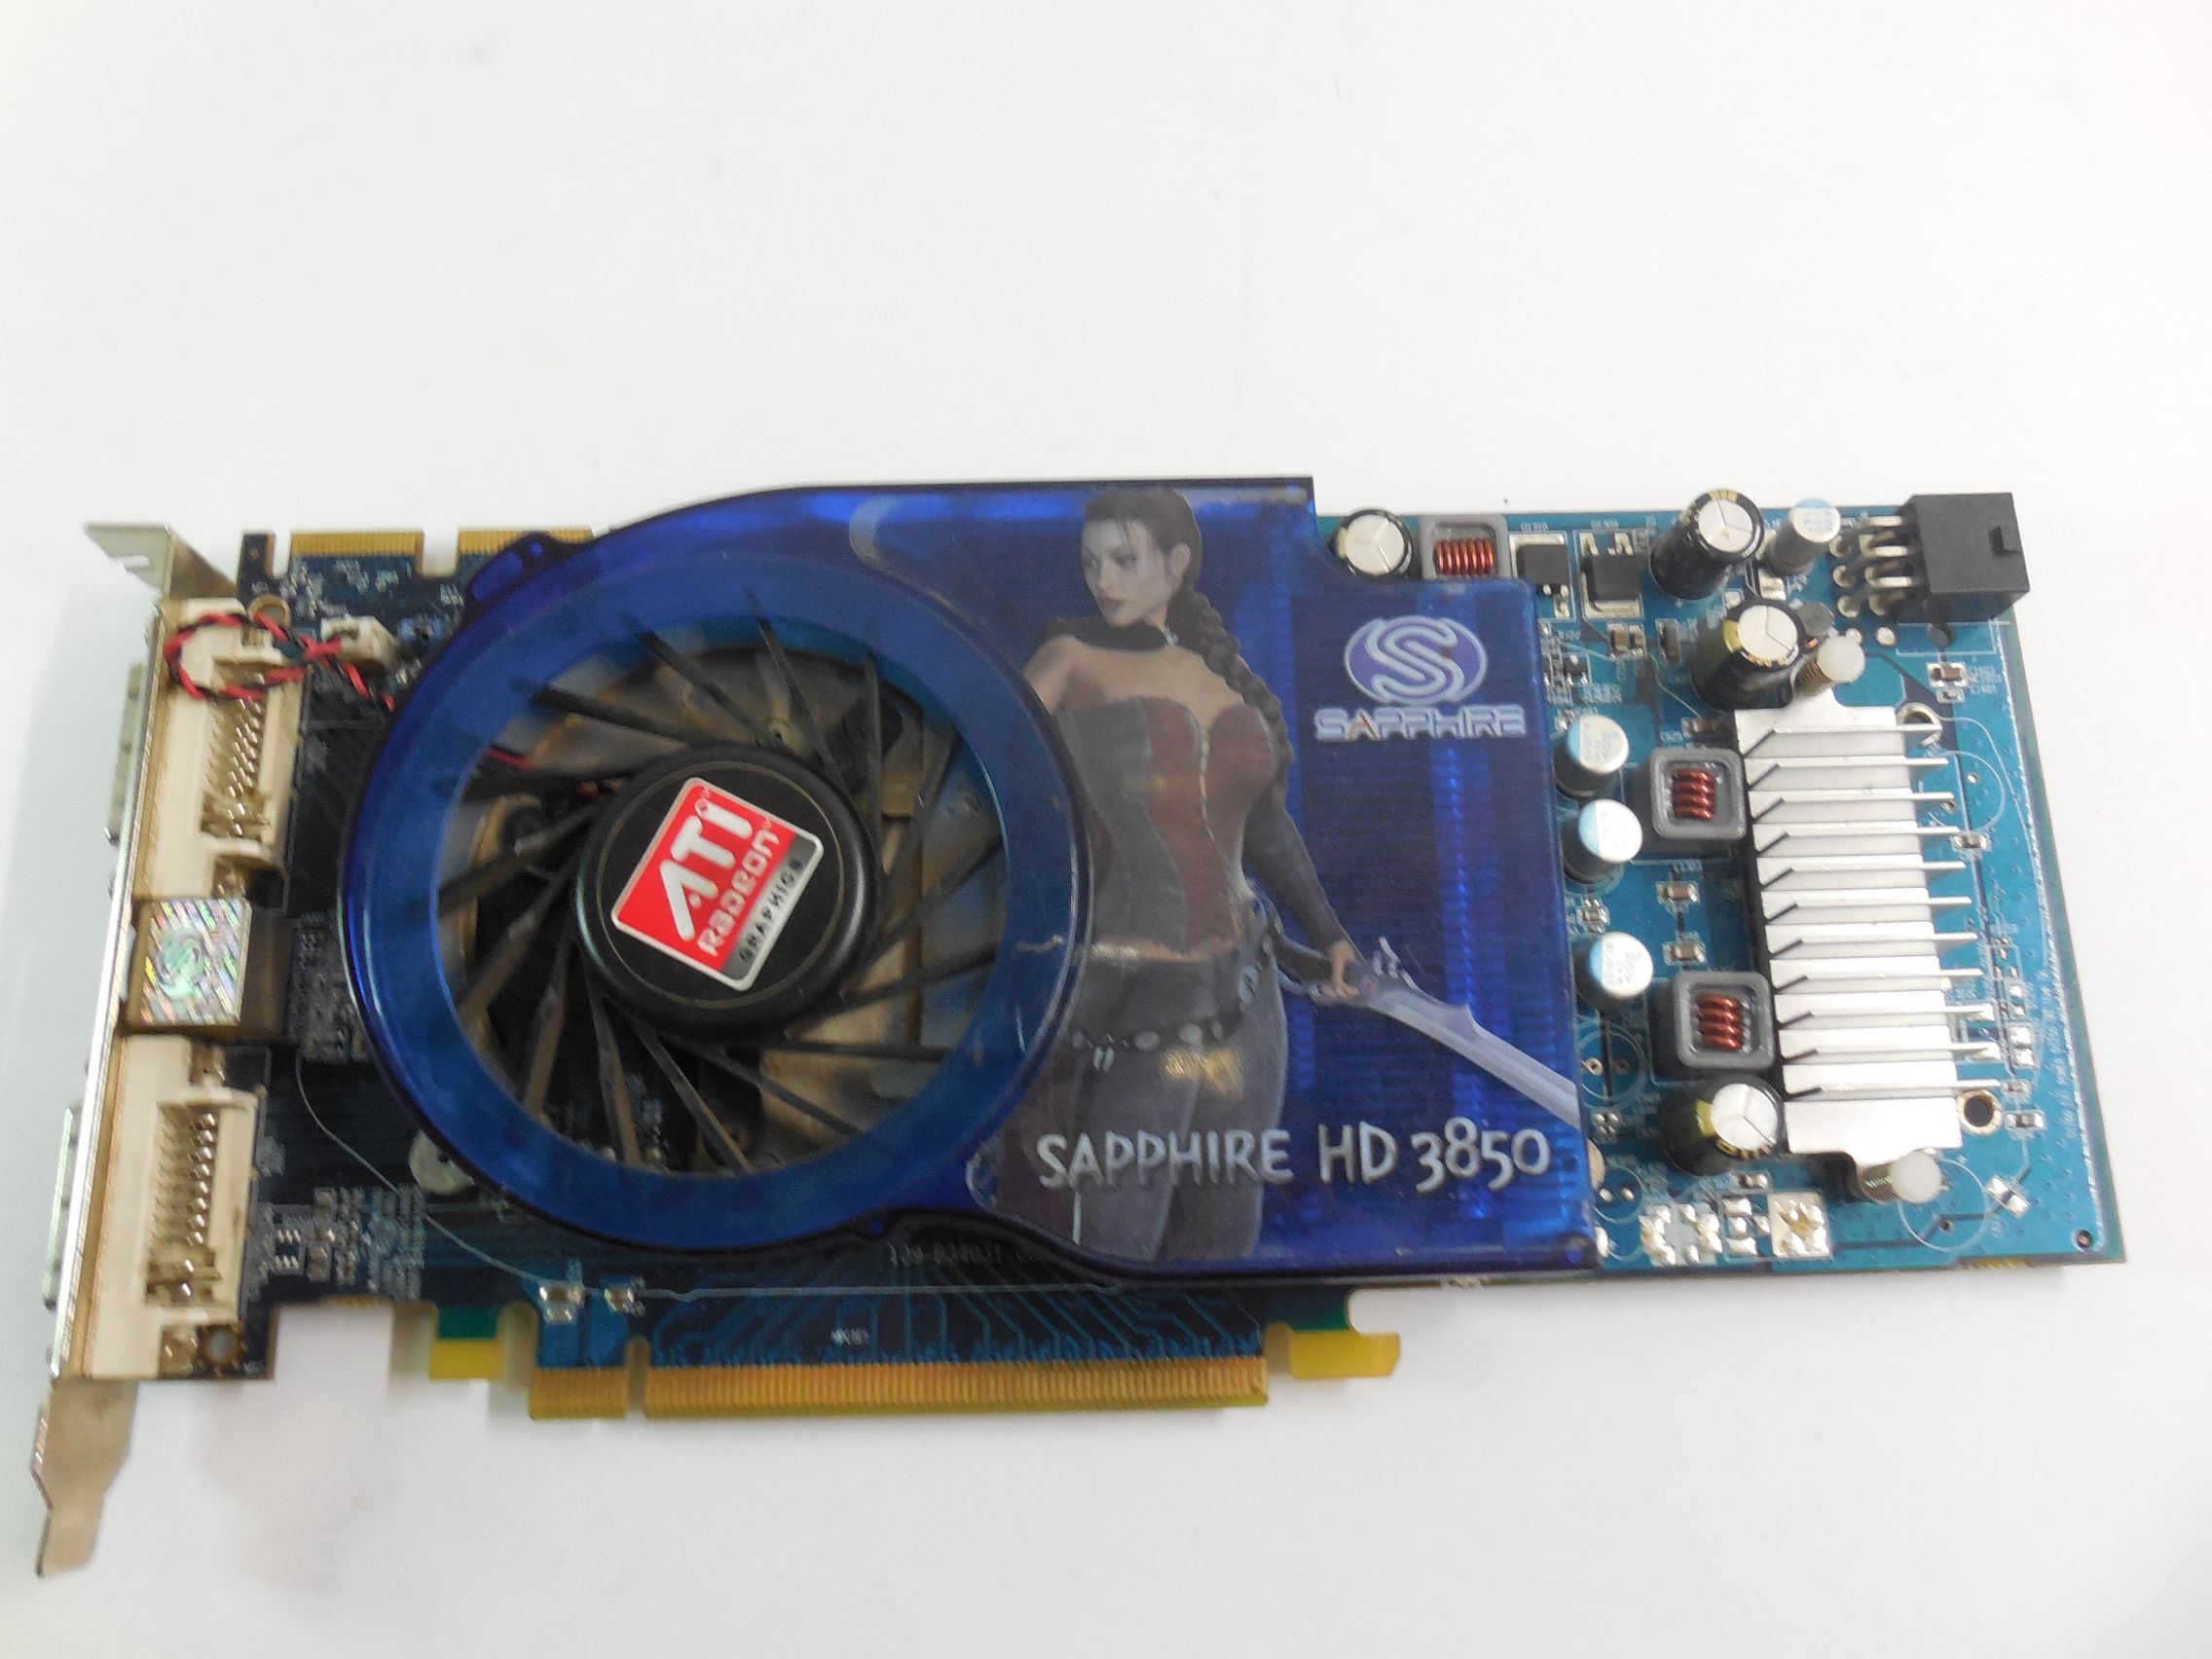 Ati radeon 3850. Видеокарта Sapphire Radeon 3850. Hd3850 Sapphire PCI.